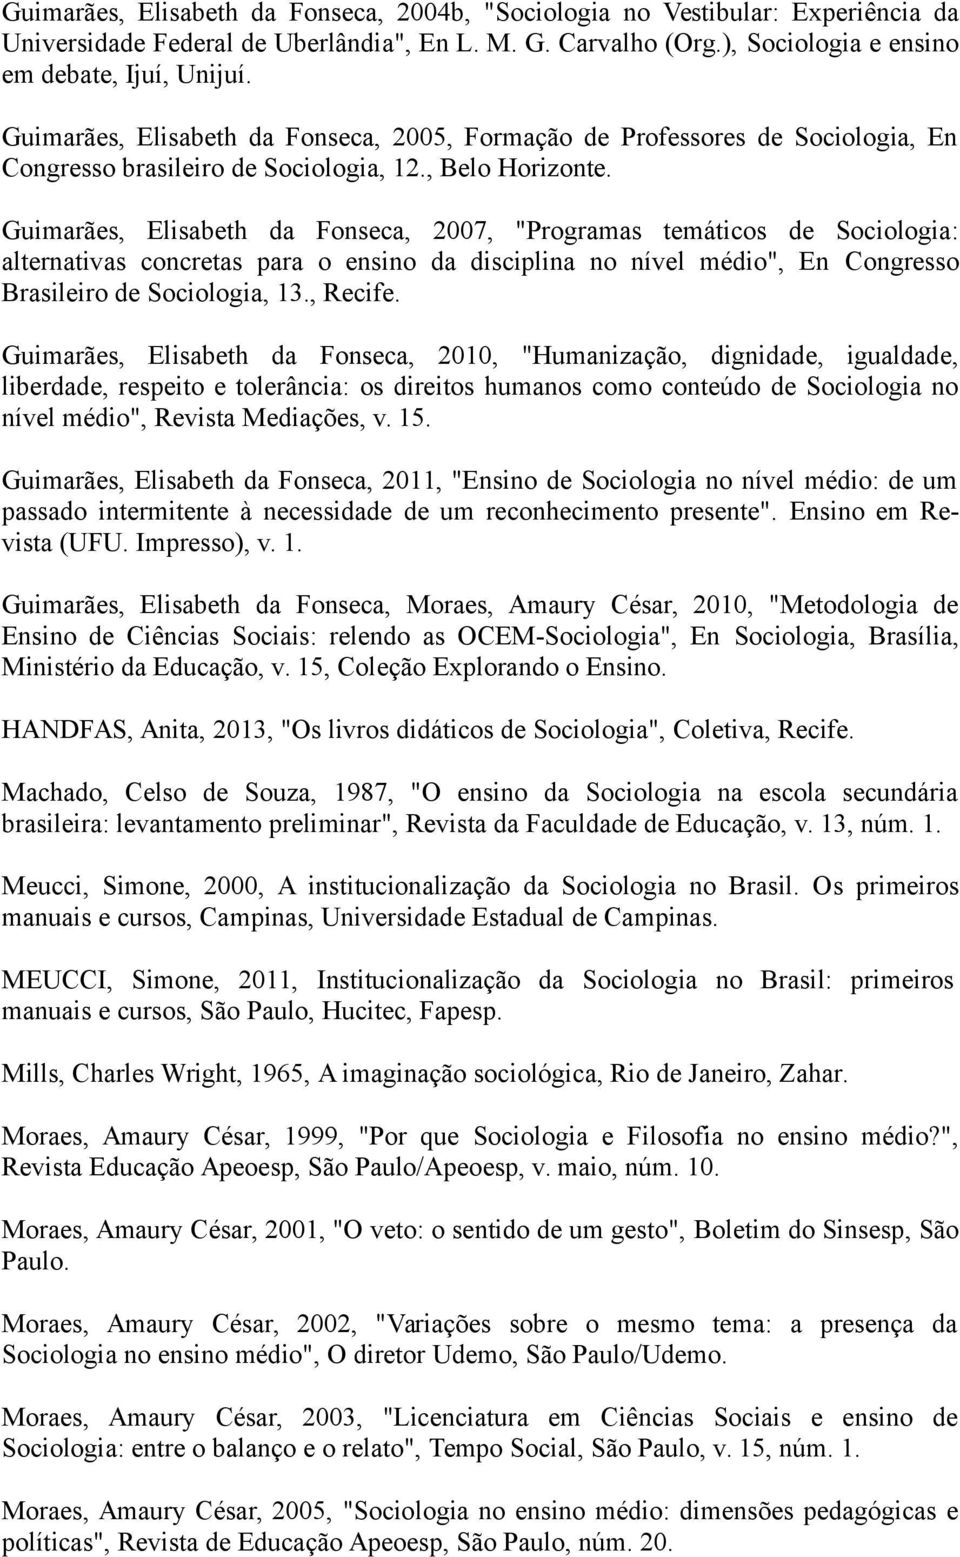 Guimarães, Elisabeth da Fonseca, 2007, "Programas temáticos de Sociologia: alternativas concretas para o ensino da disciplina no nível médio", En Congresso Brasileiro de Sociologia, 13., Recife.